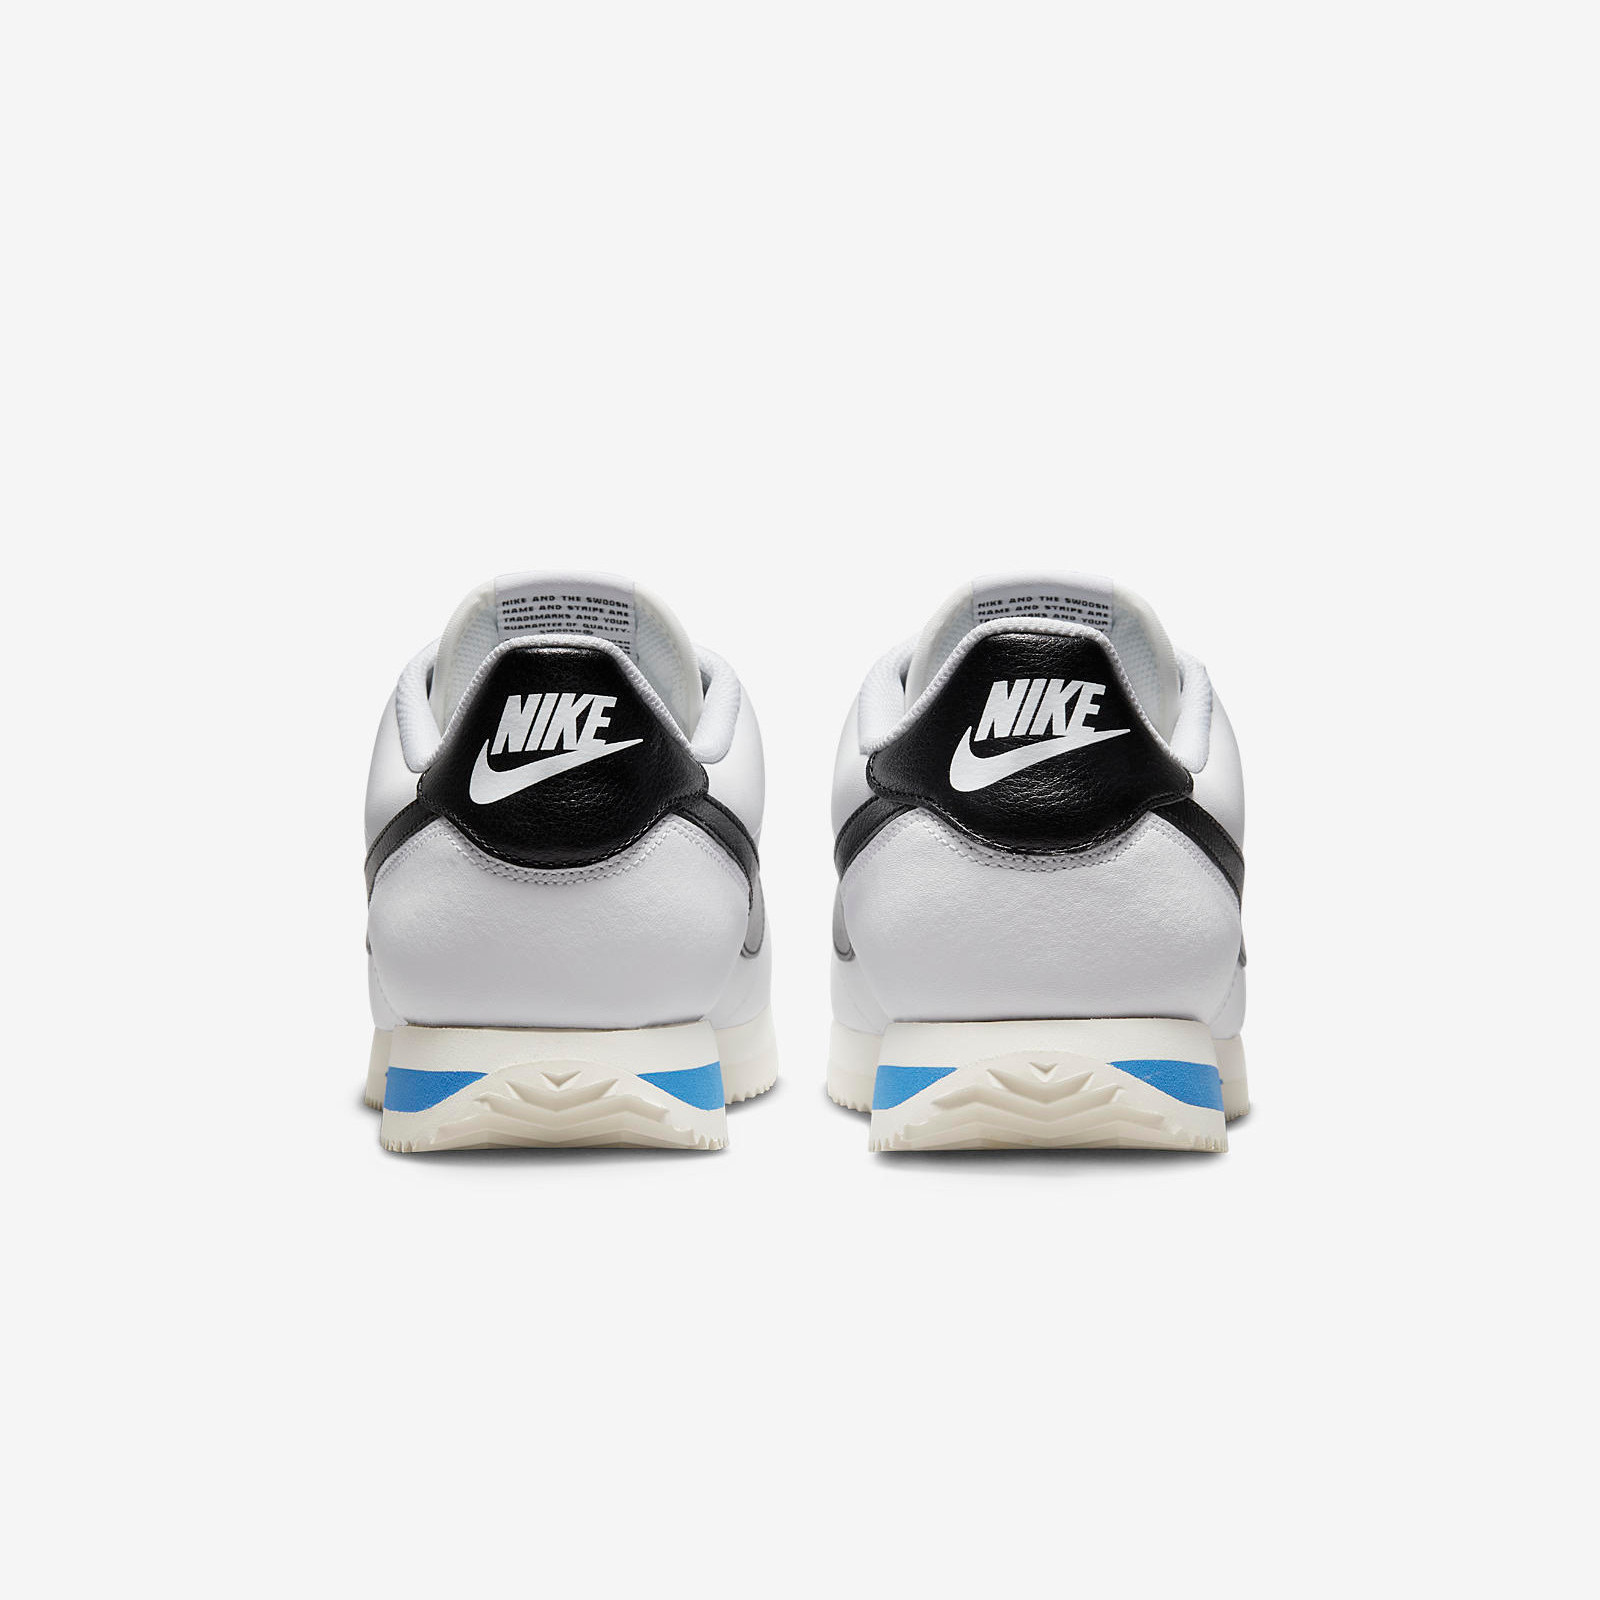 Nike Cortez
White / Black